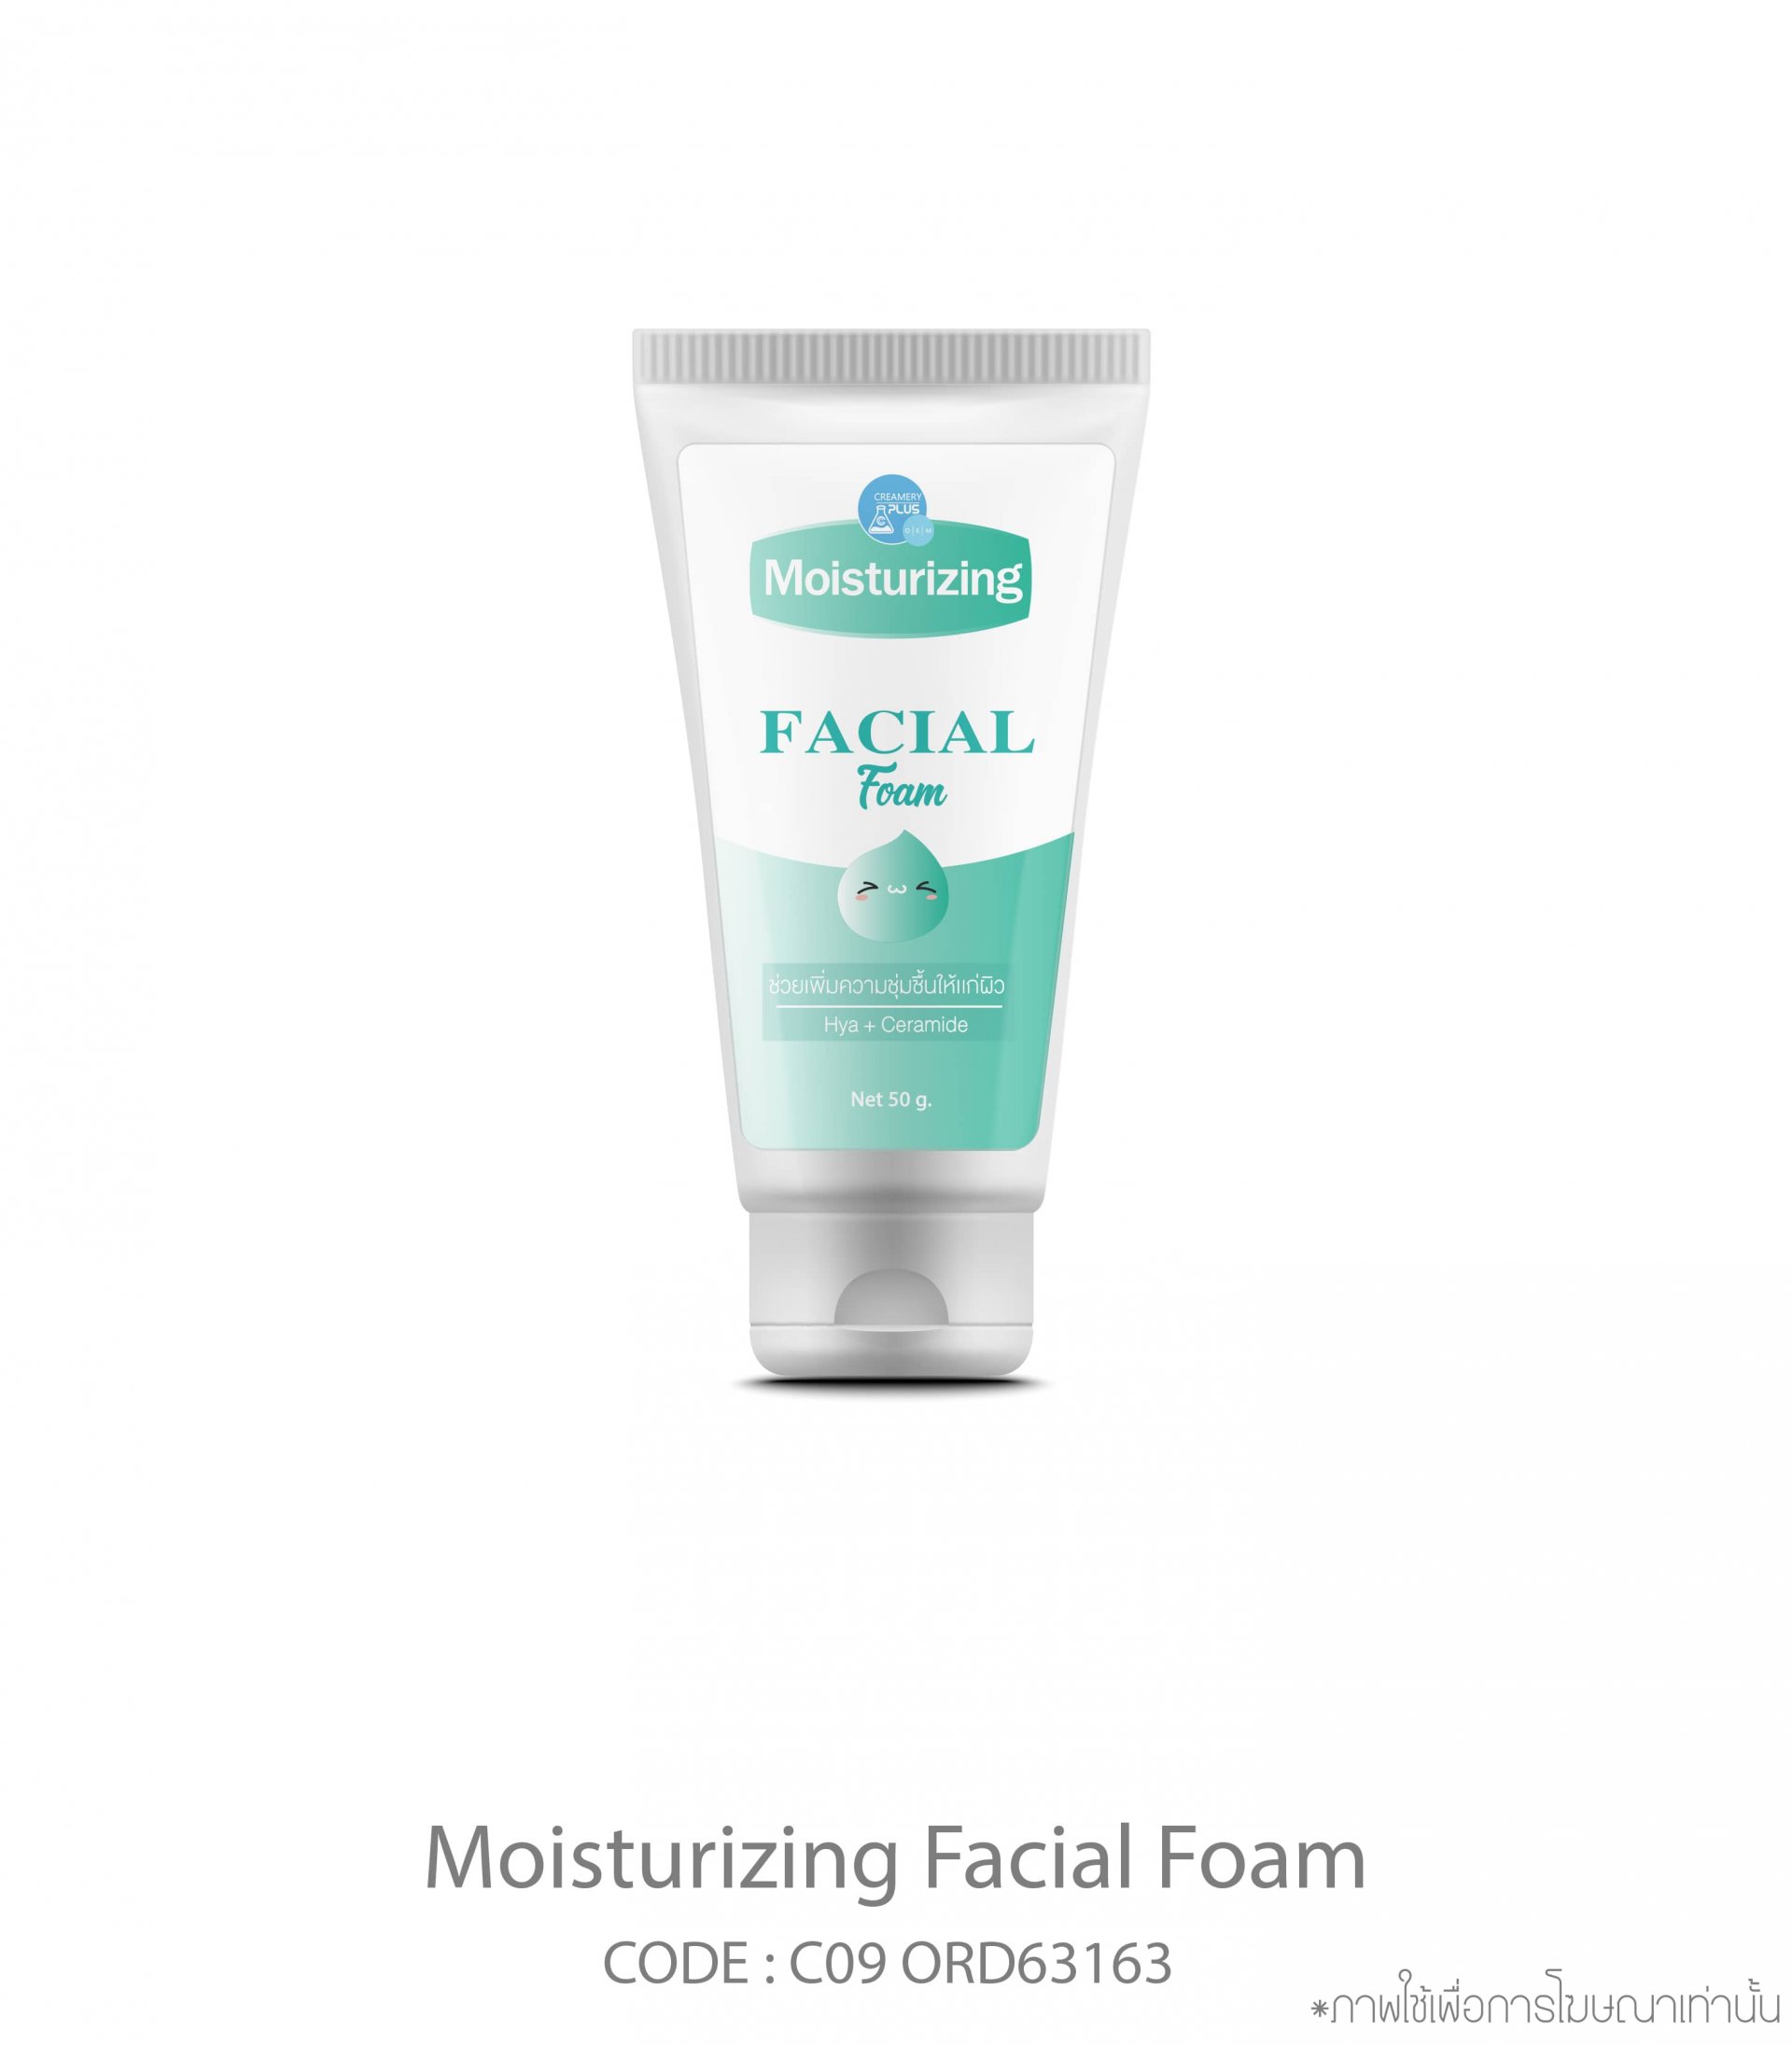 Moisturizing Facial Foam